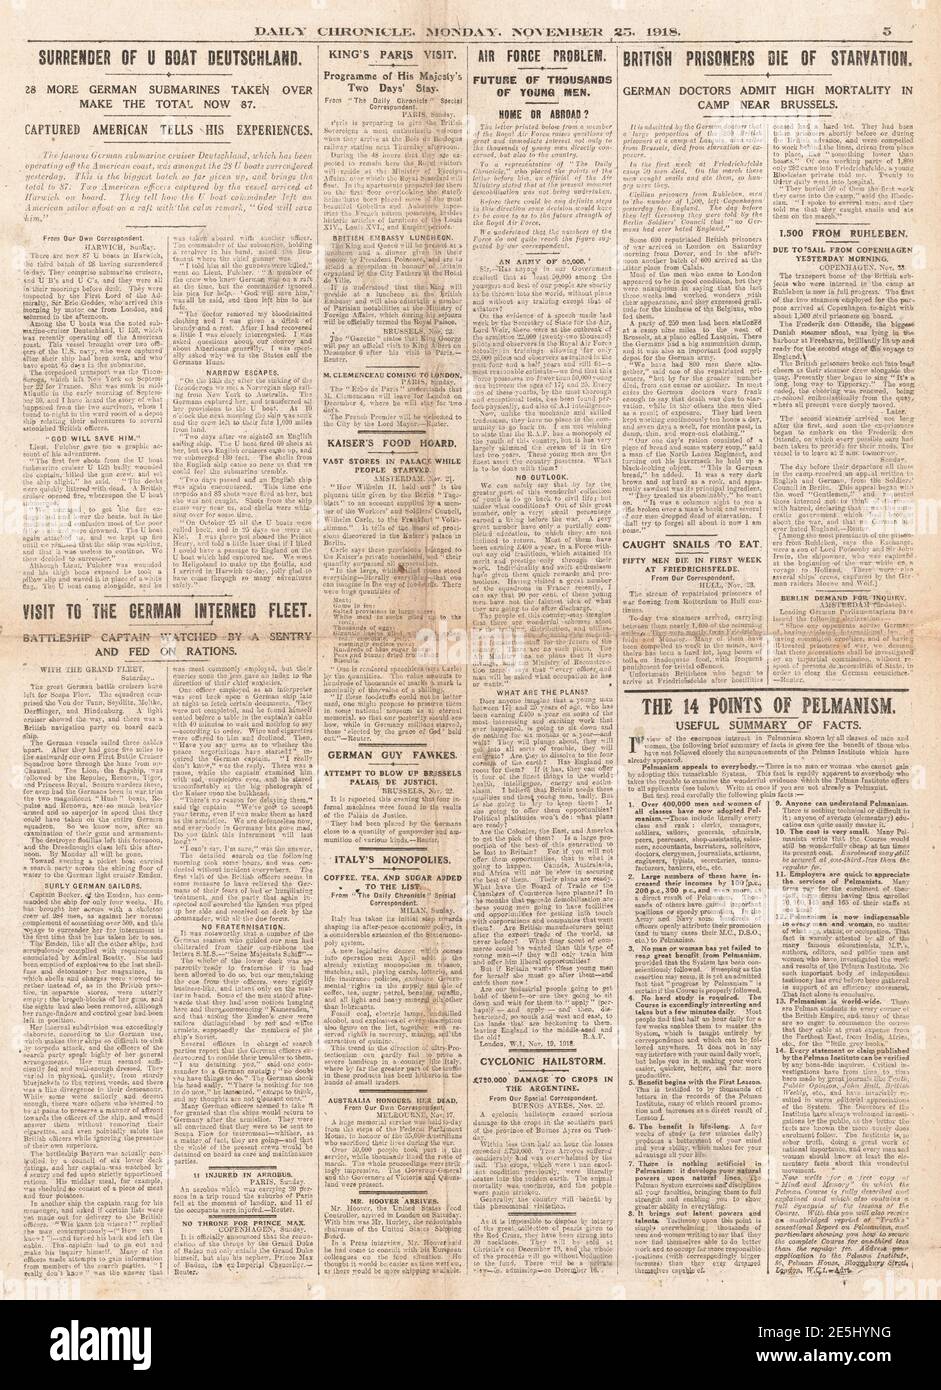 1918 Daily Chronicle Surrender of U-Boat Deutschland Stock Photo